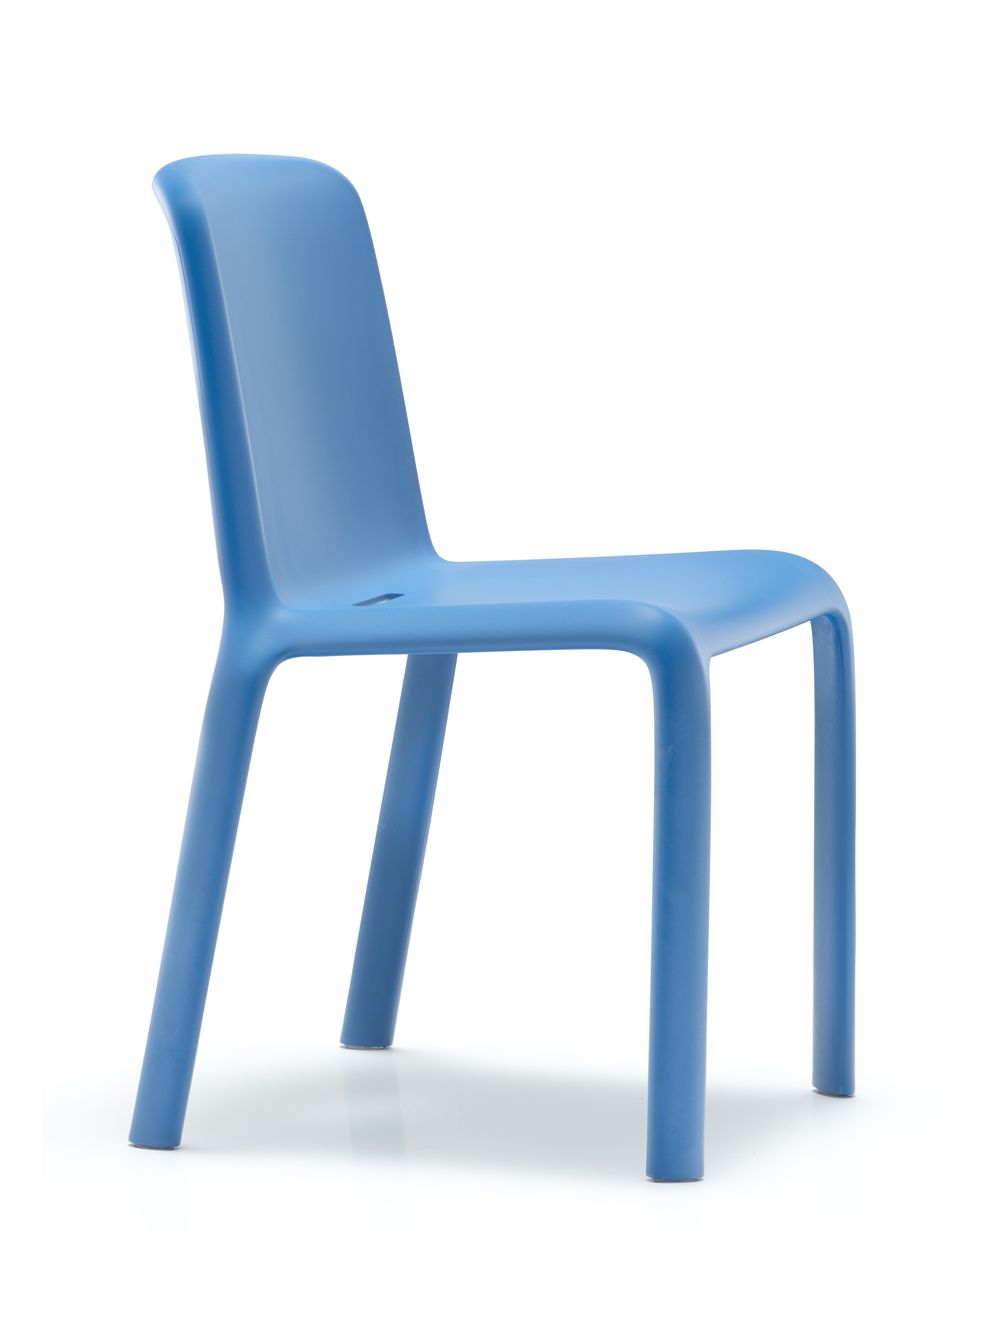 Snow Chair Online Shop | Sedie.Design®